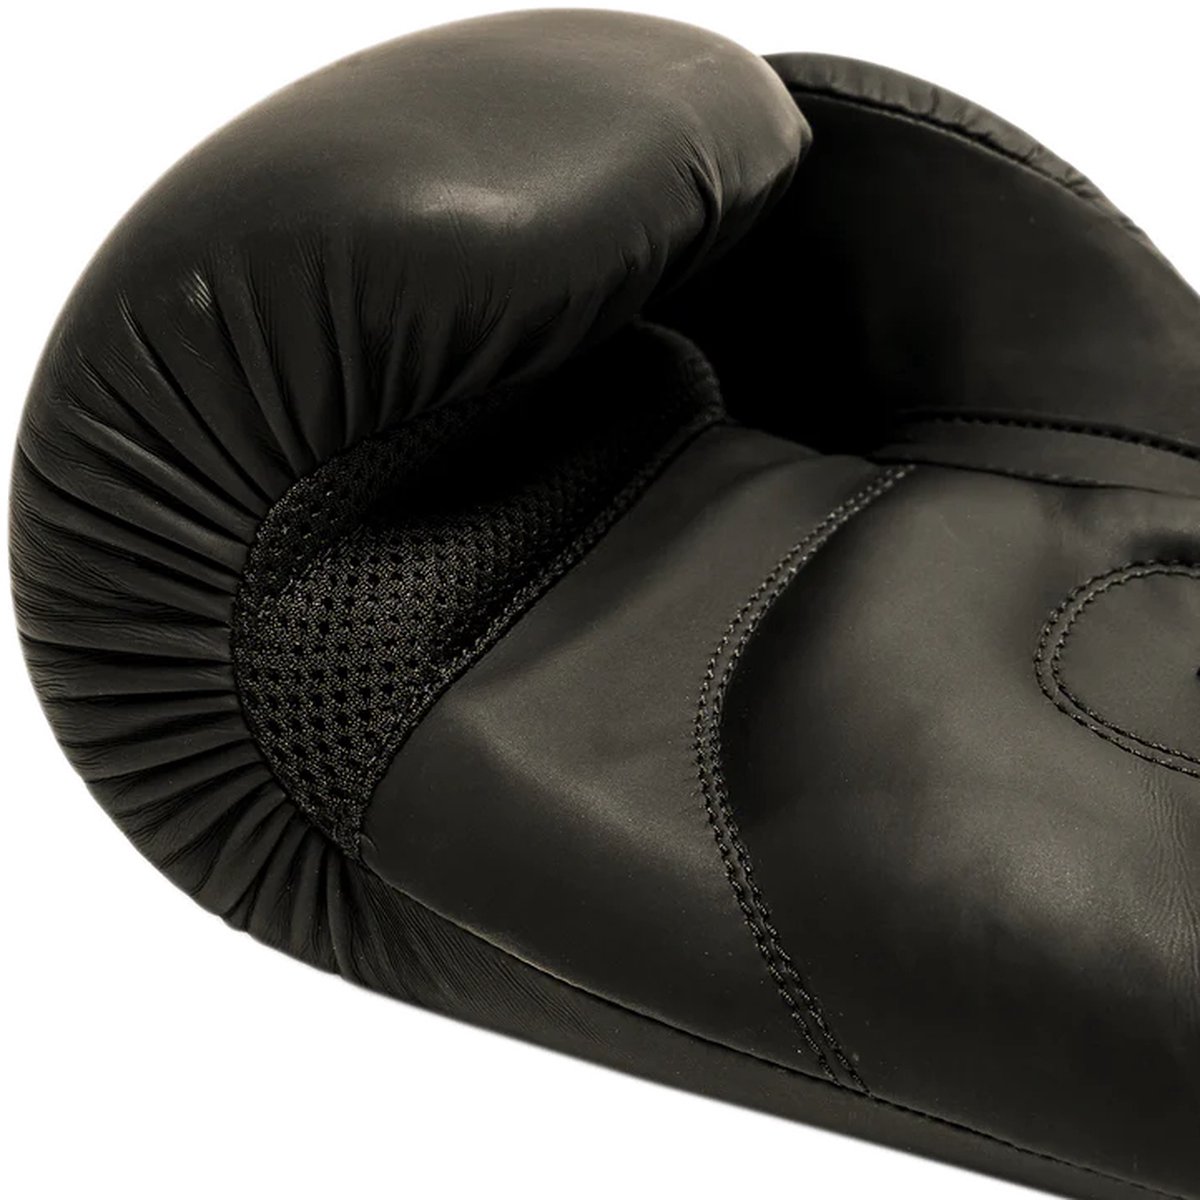 Ground Force Boxing Gloves - Black 14oz